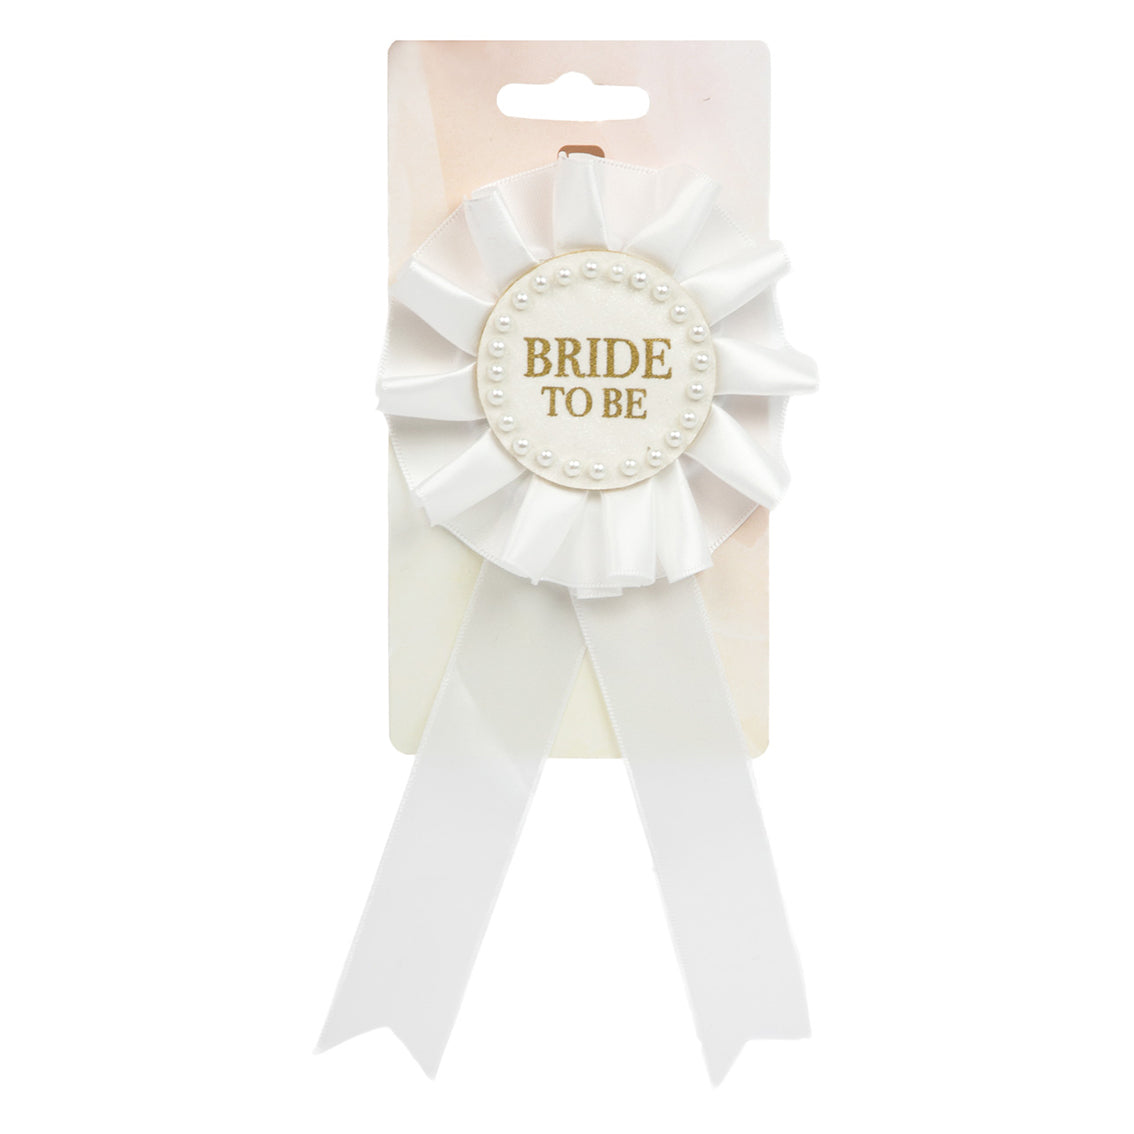 Bride To Be Pearl Rosette in packaging